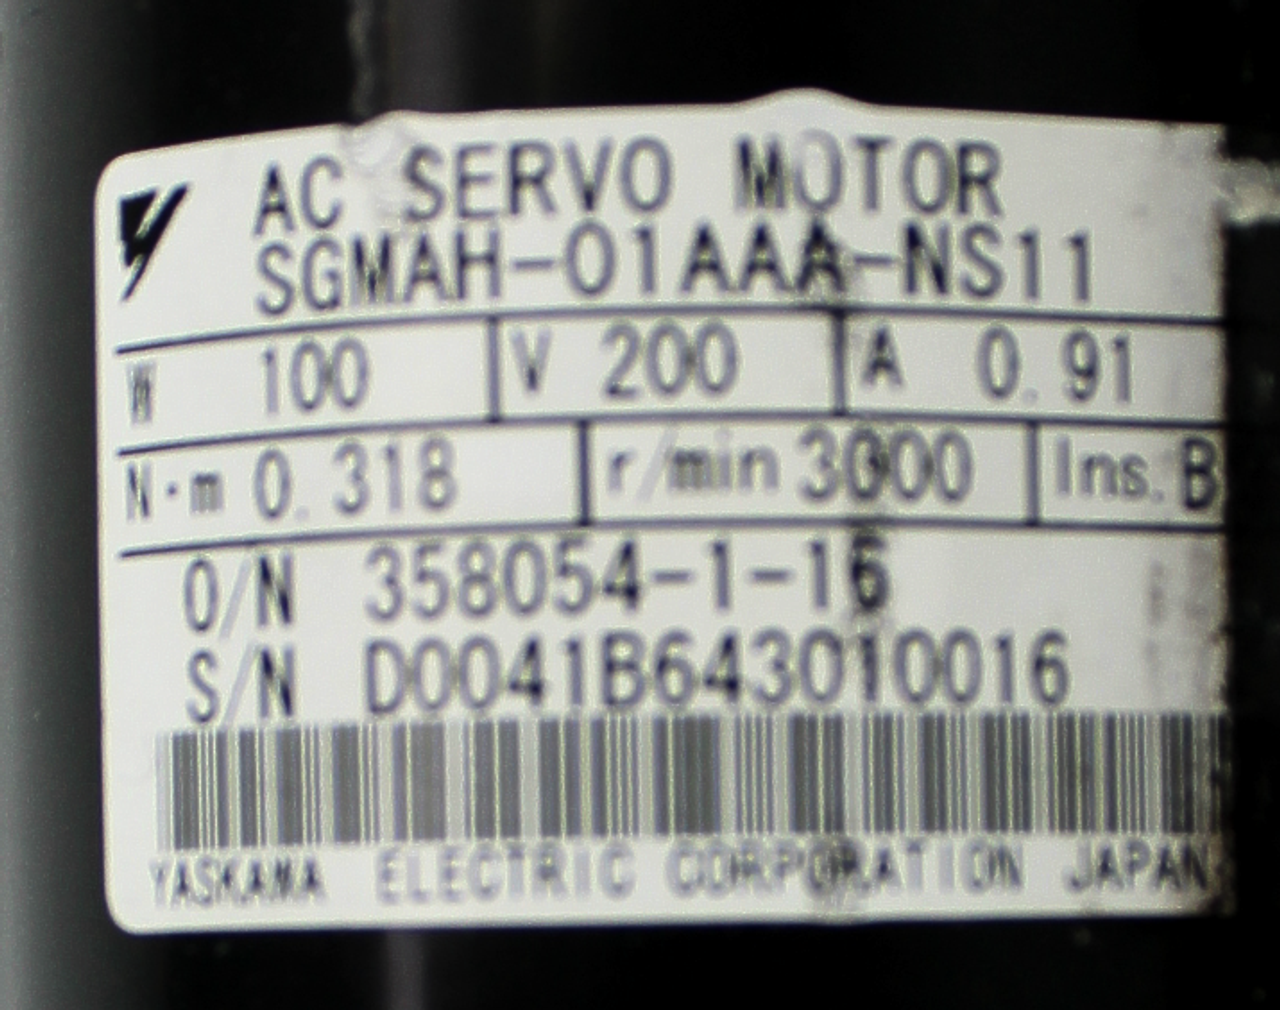 Nitto Seiko AX Driver A050542 w/ Yaskawa SGMAH-01AAA-NS11 AC Servo Motor